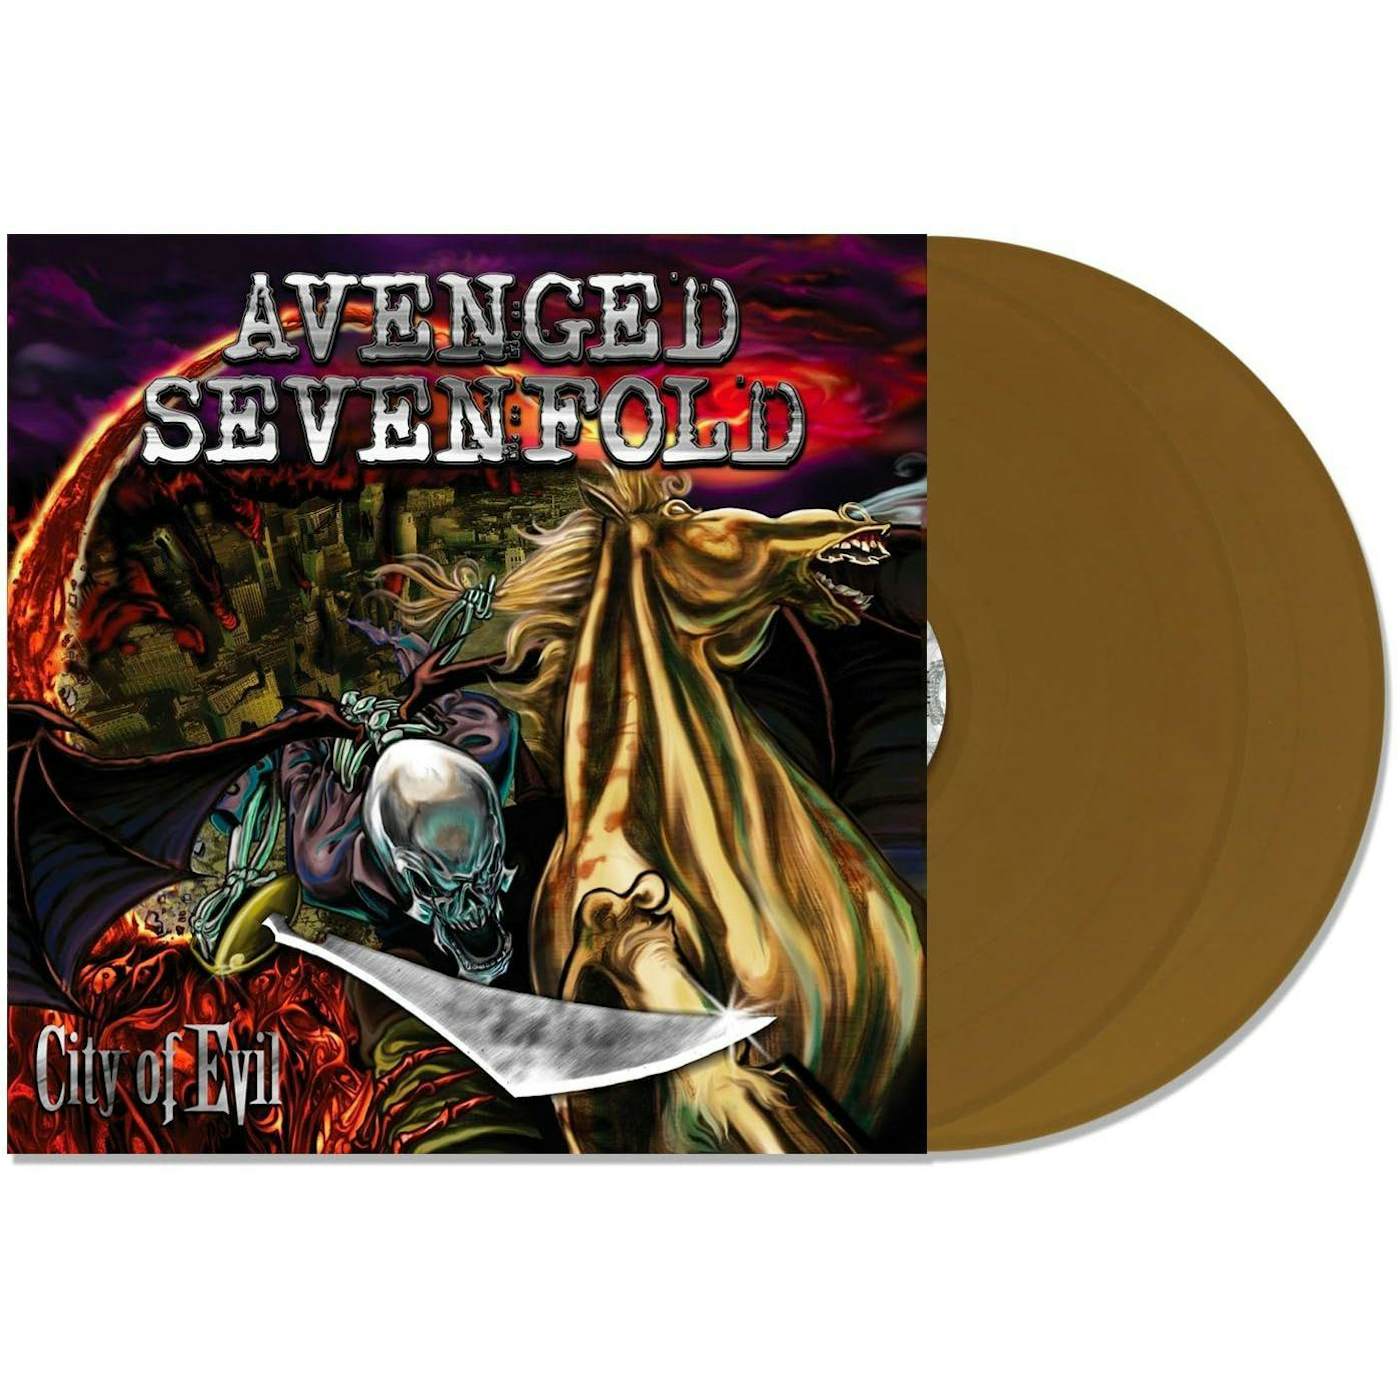 Avenged Sevenfold City Of Evil (Gold) (Explicit Content) Vinyl Record